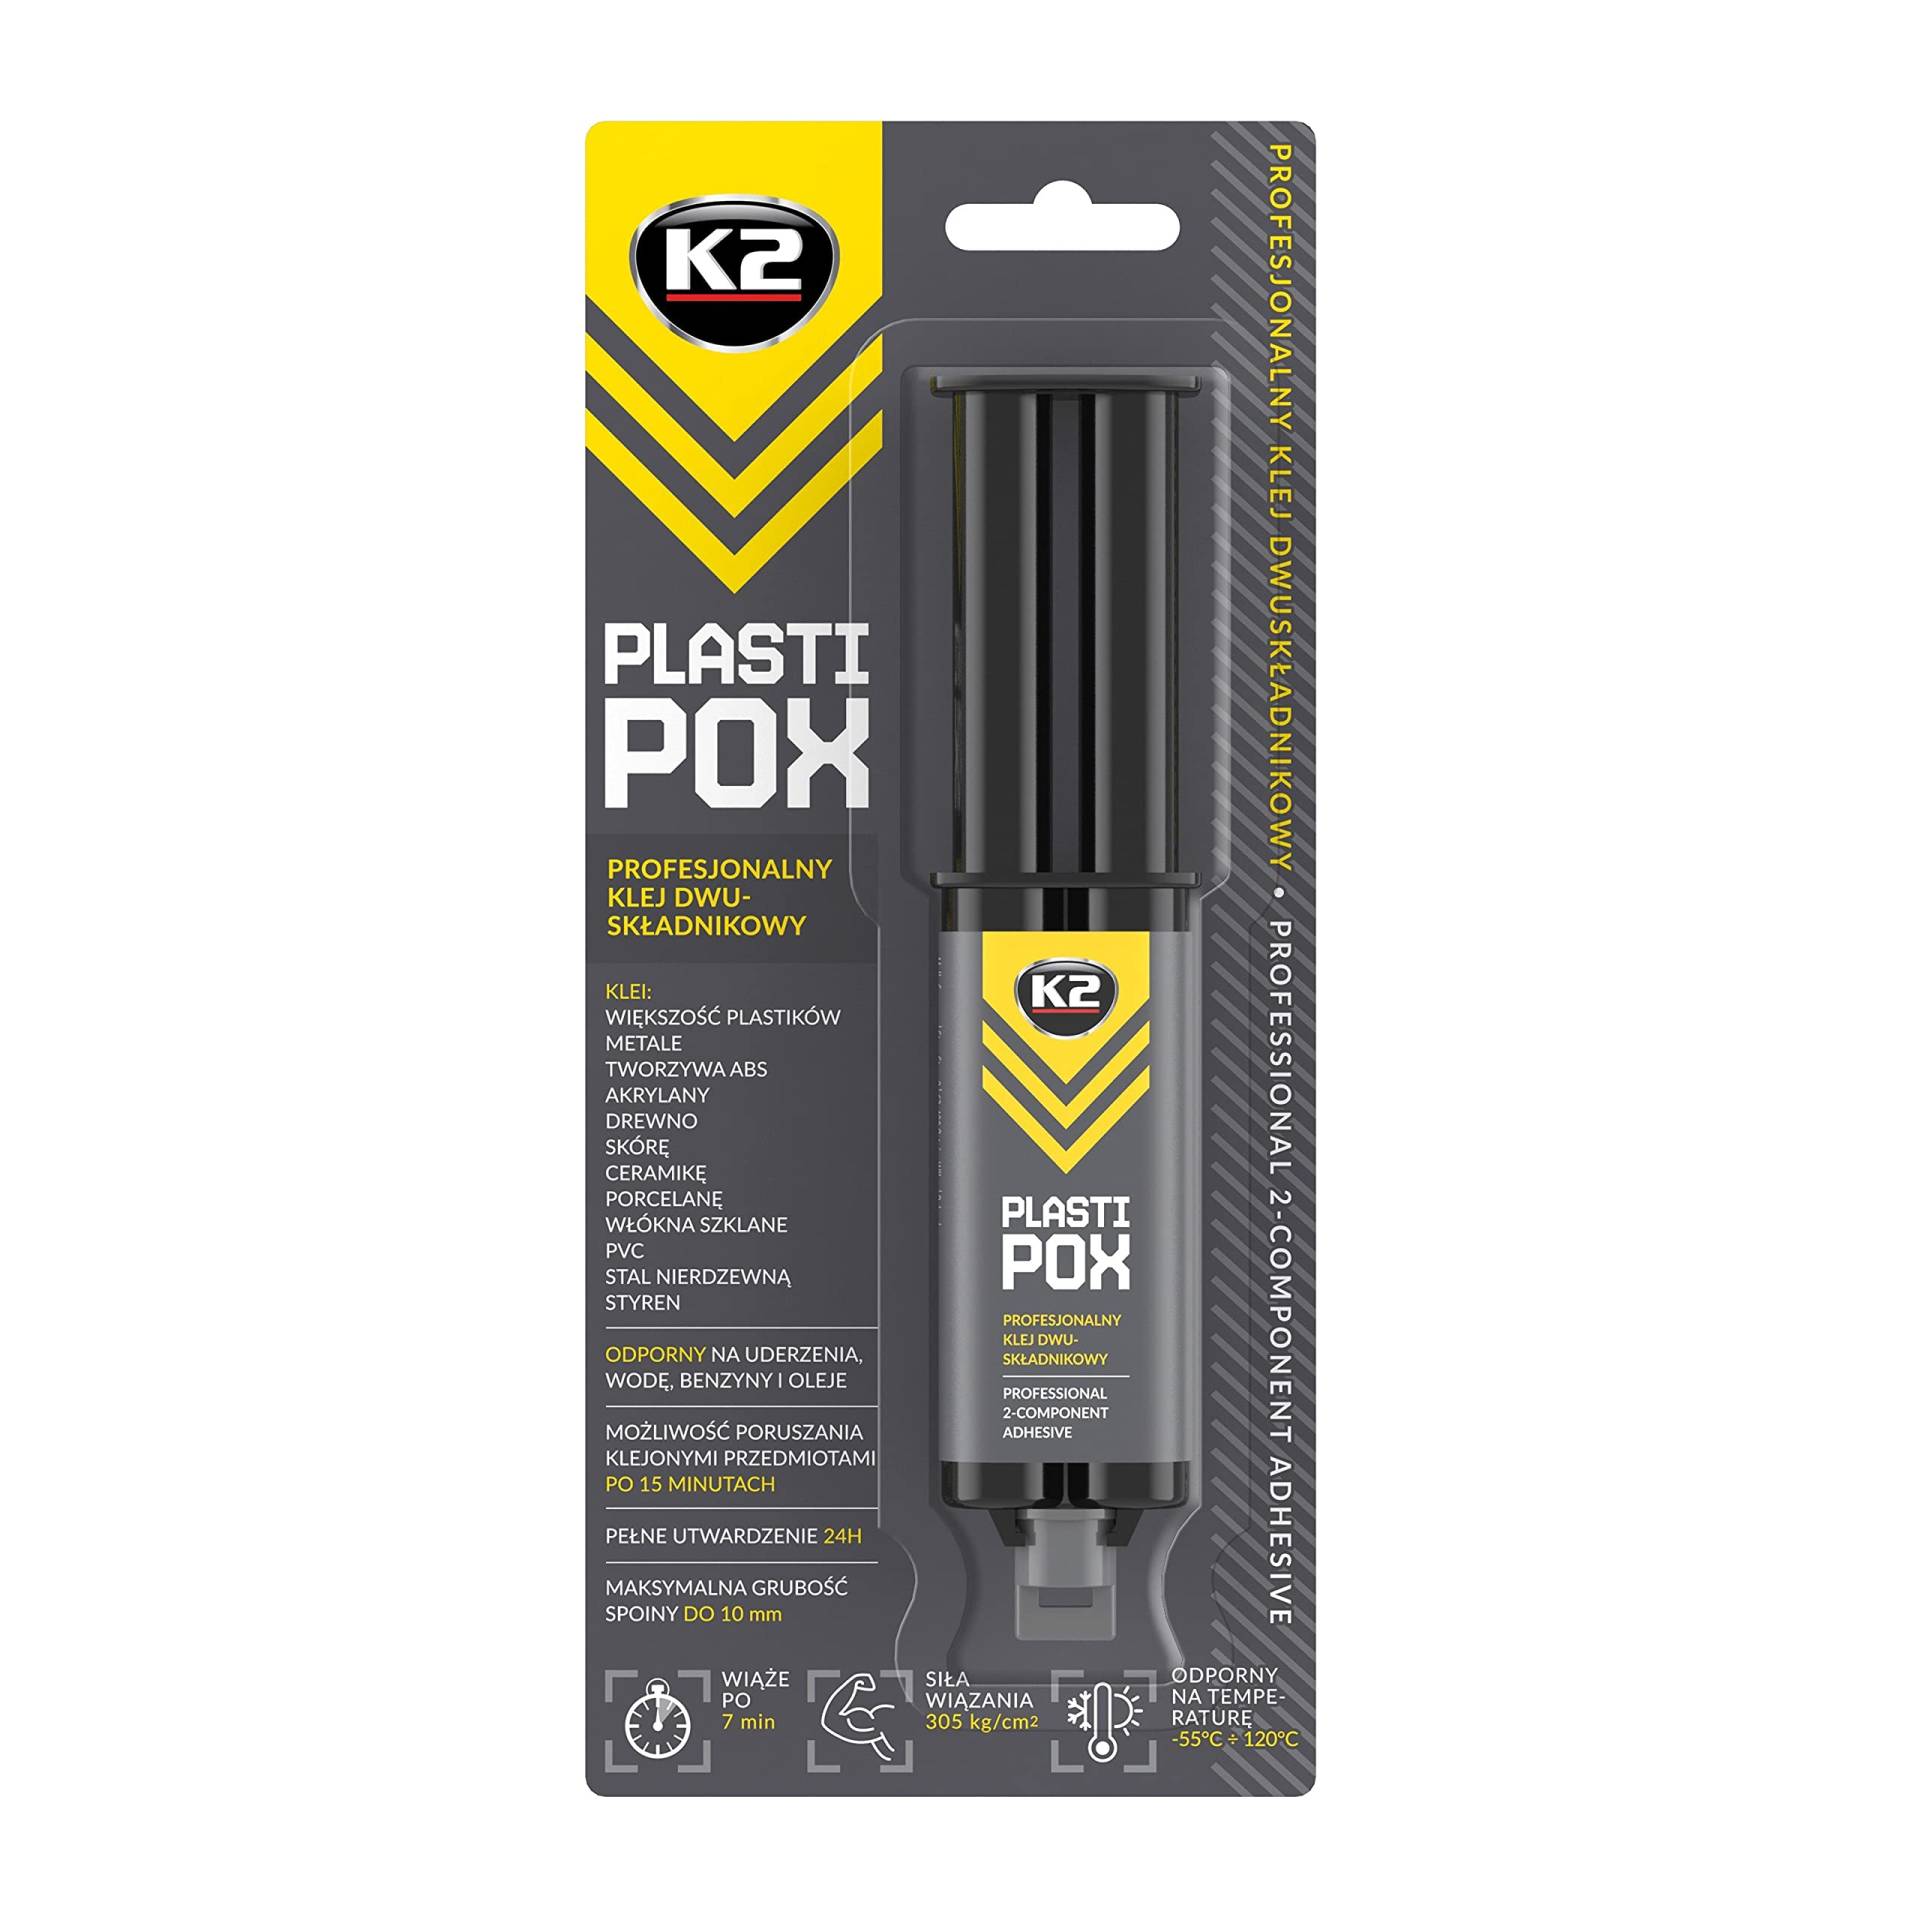 K2 PLASTIPOX 25G - Professional adhesive for plastics von K2